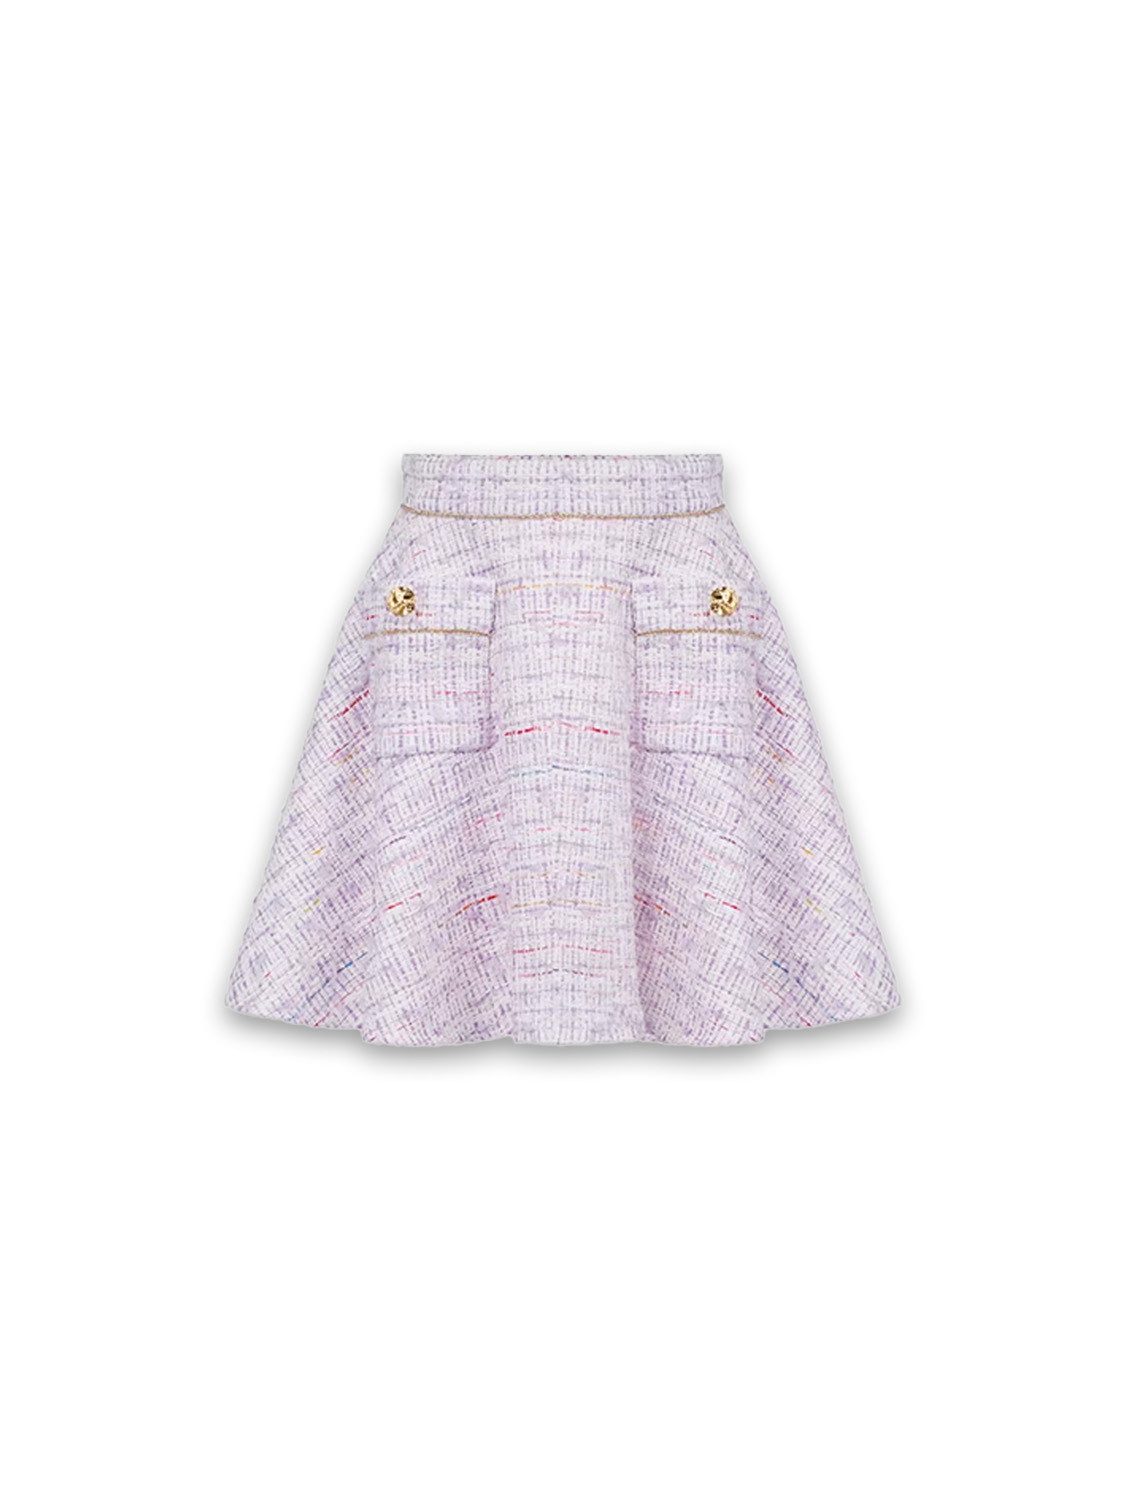 Nina Ricci Ausgestellter Tweed-Minirock mit Lurex-Effekten  rosa 34